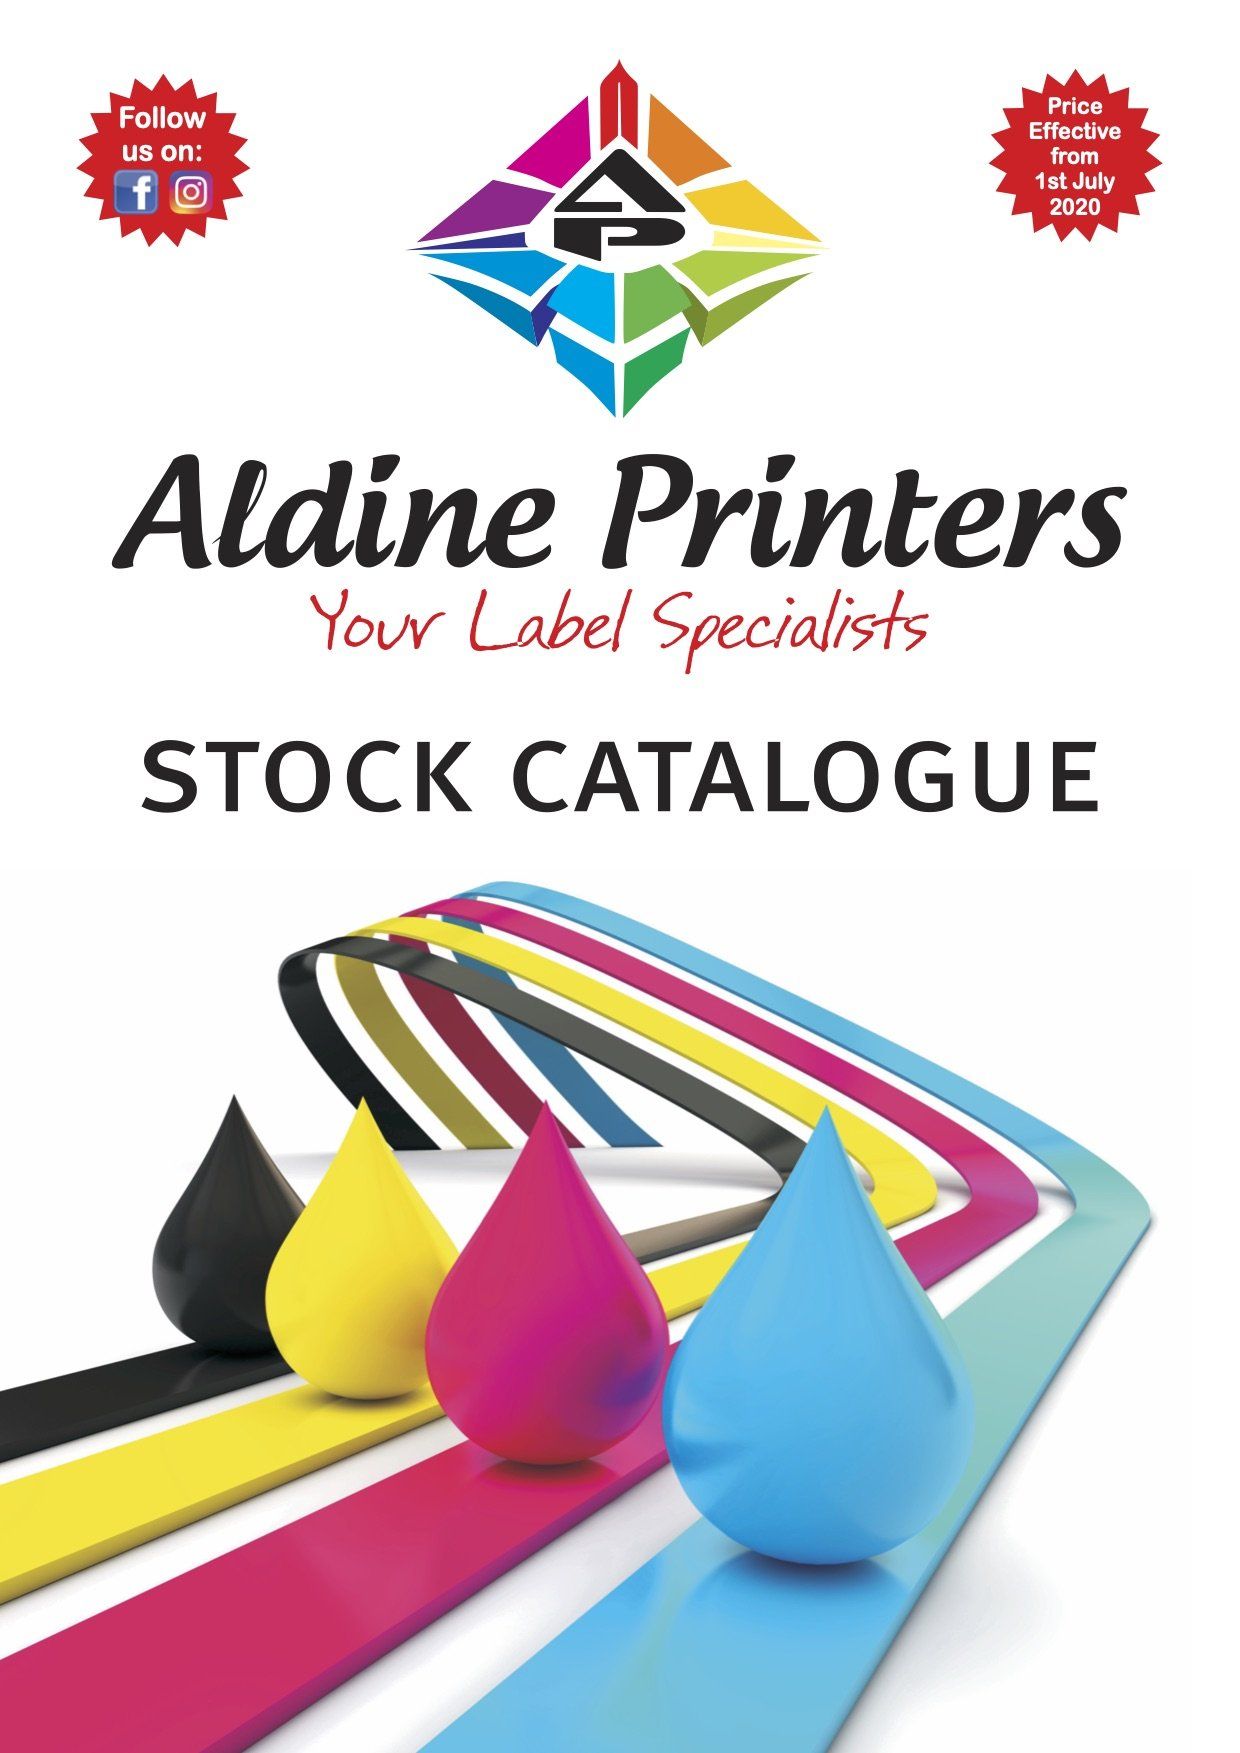 Aldine Printers Stock Catalogue